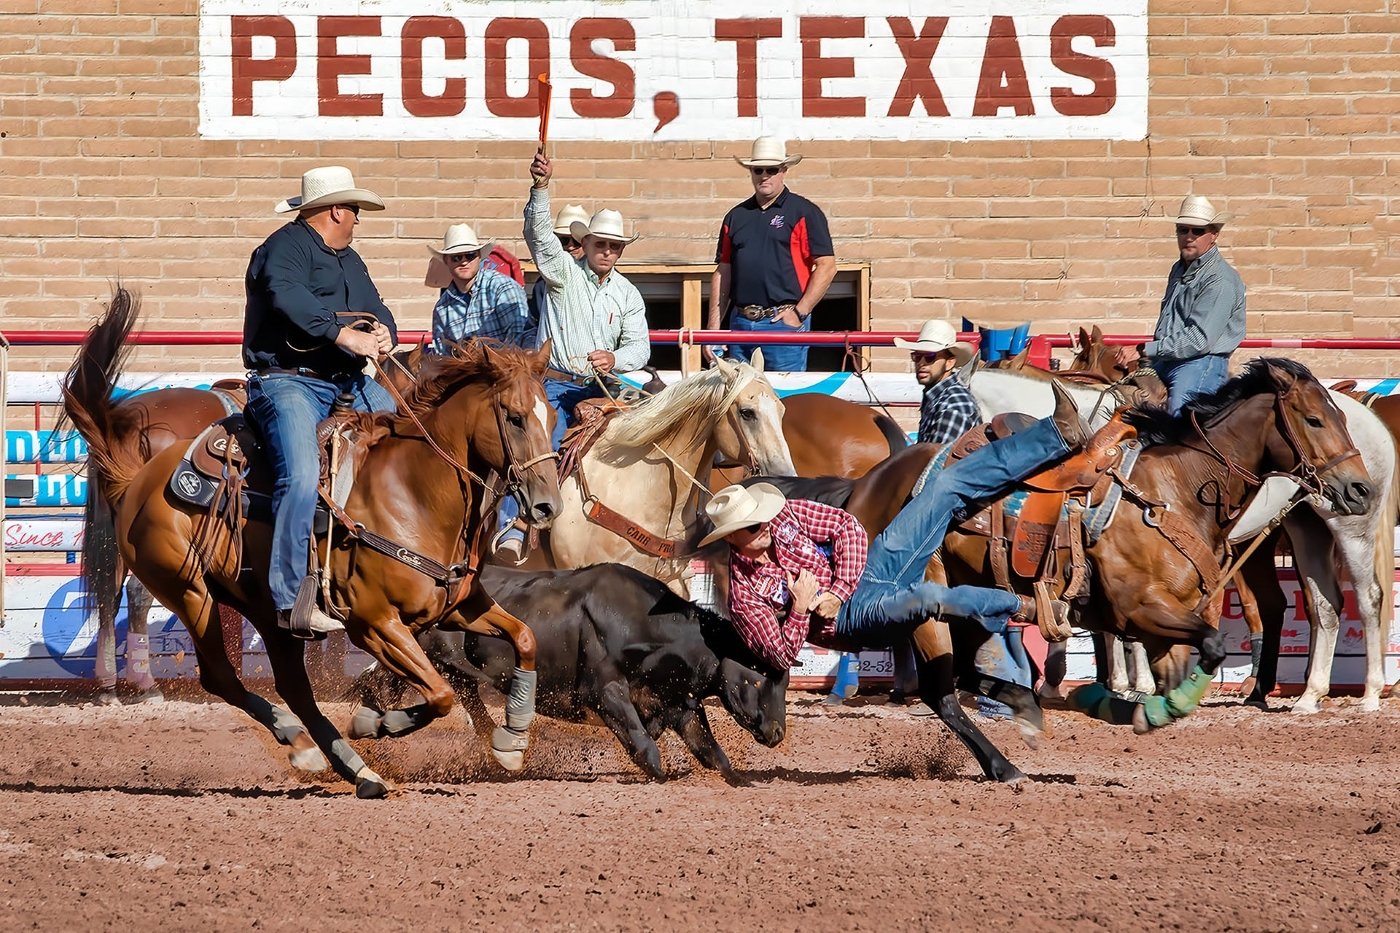 A Crowd in Pecos Texas,	Sam Lucas, Dallas Camera Club,	1 HM